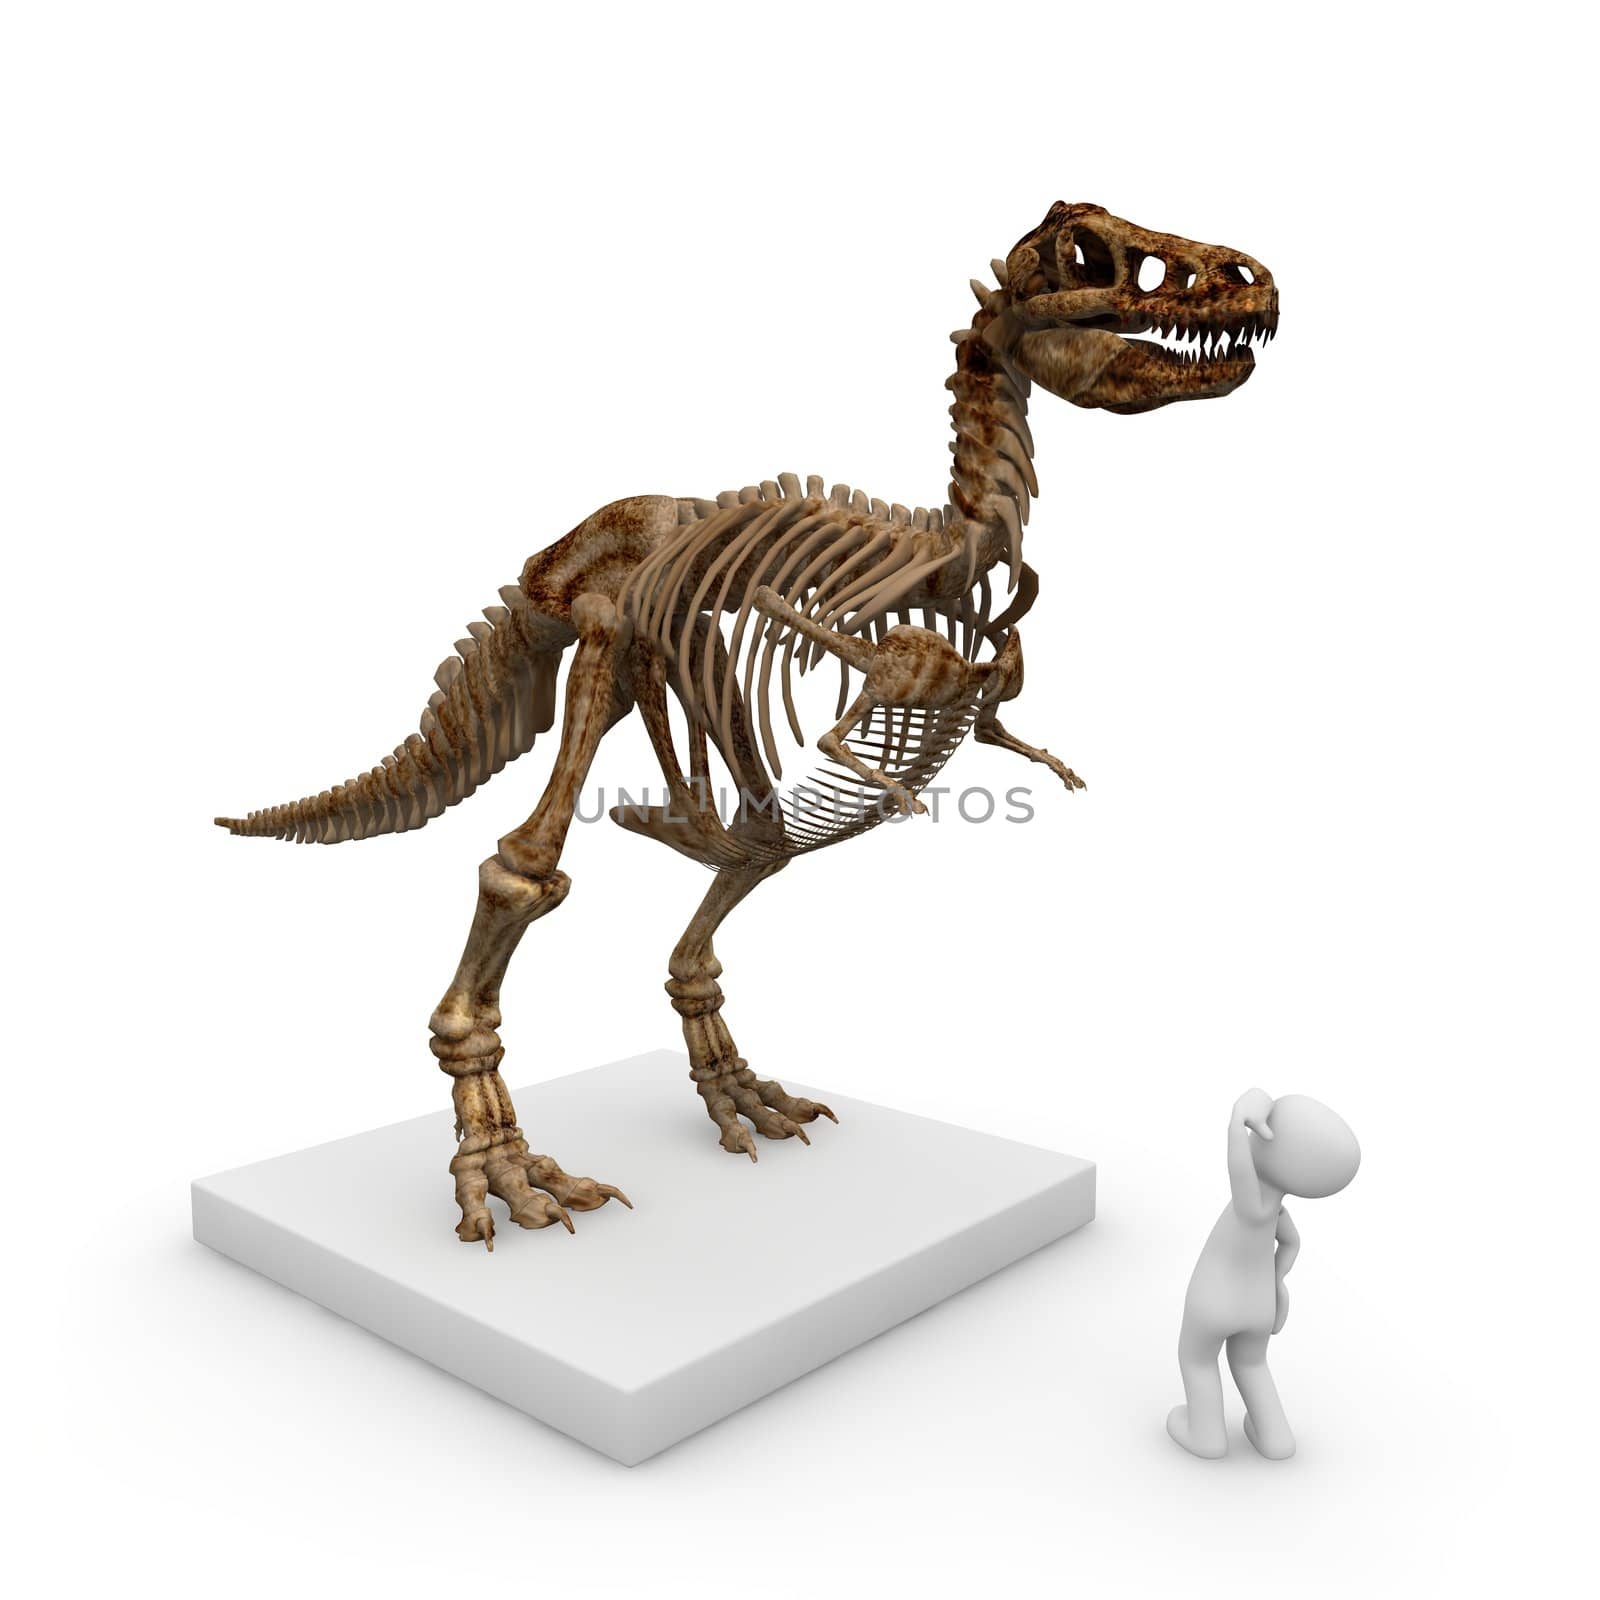 The skeleton of a dinosaur by 3DAgentur